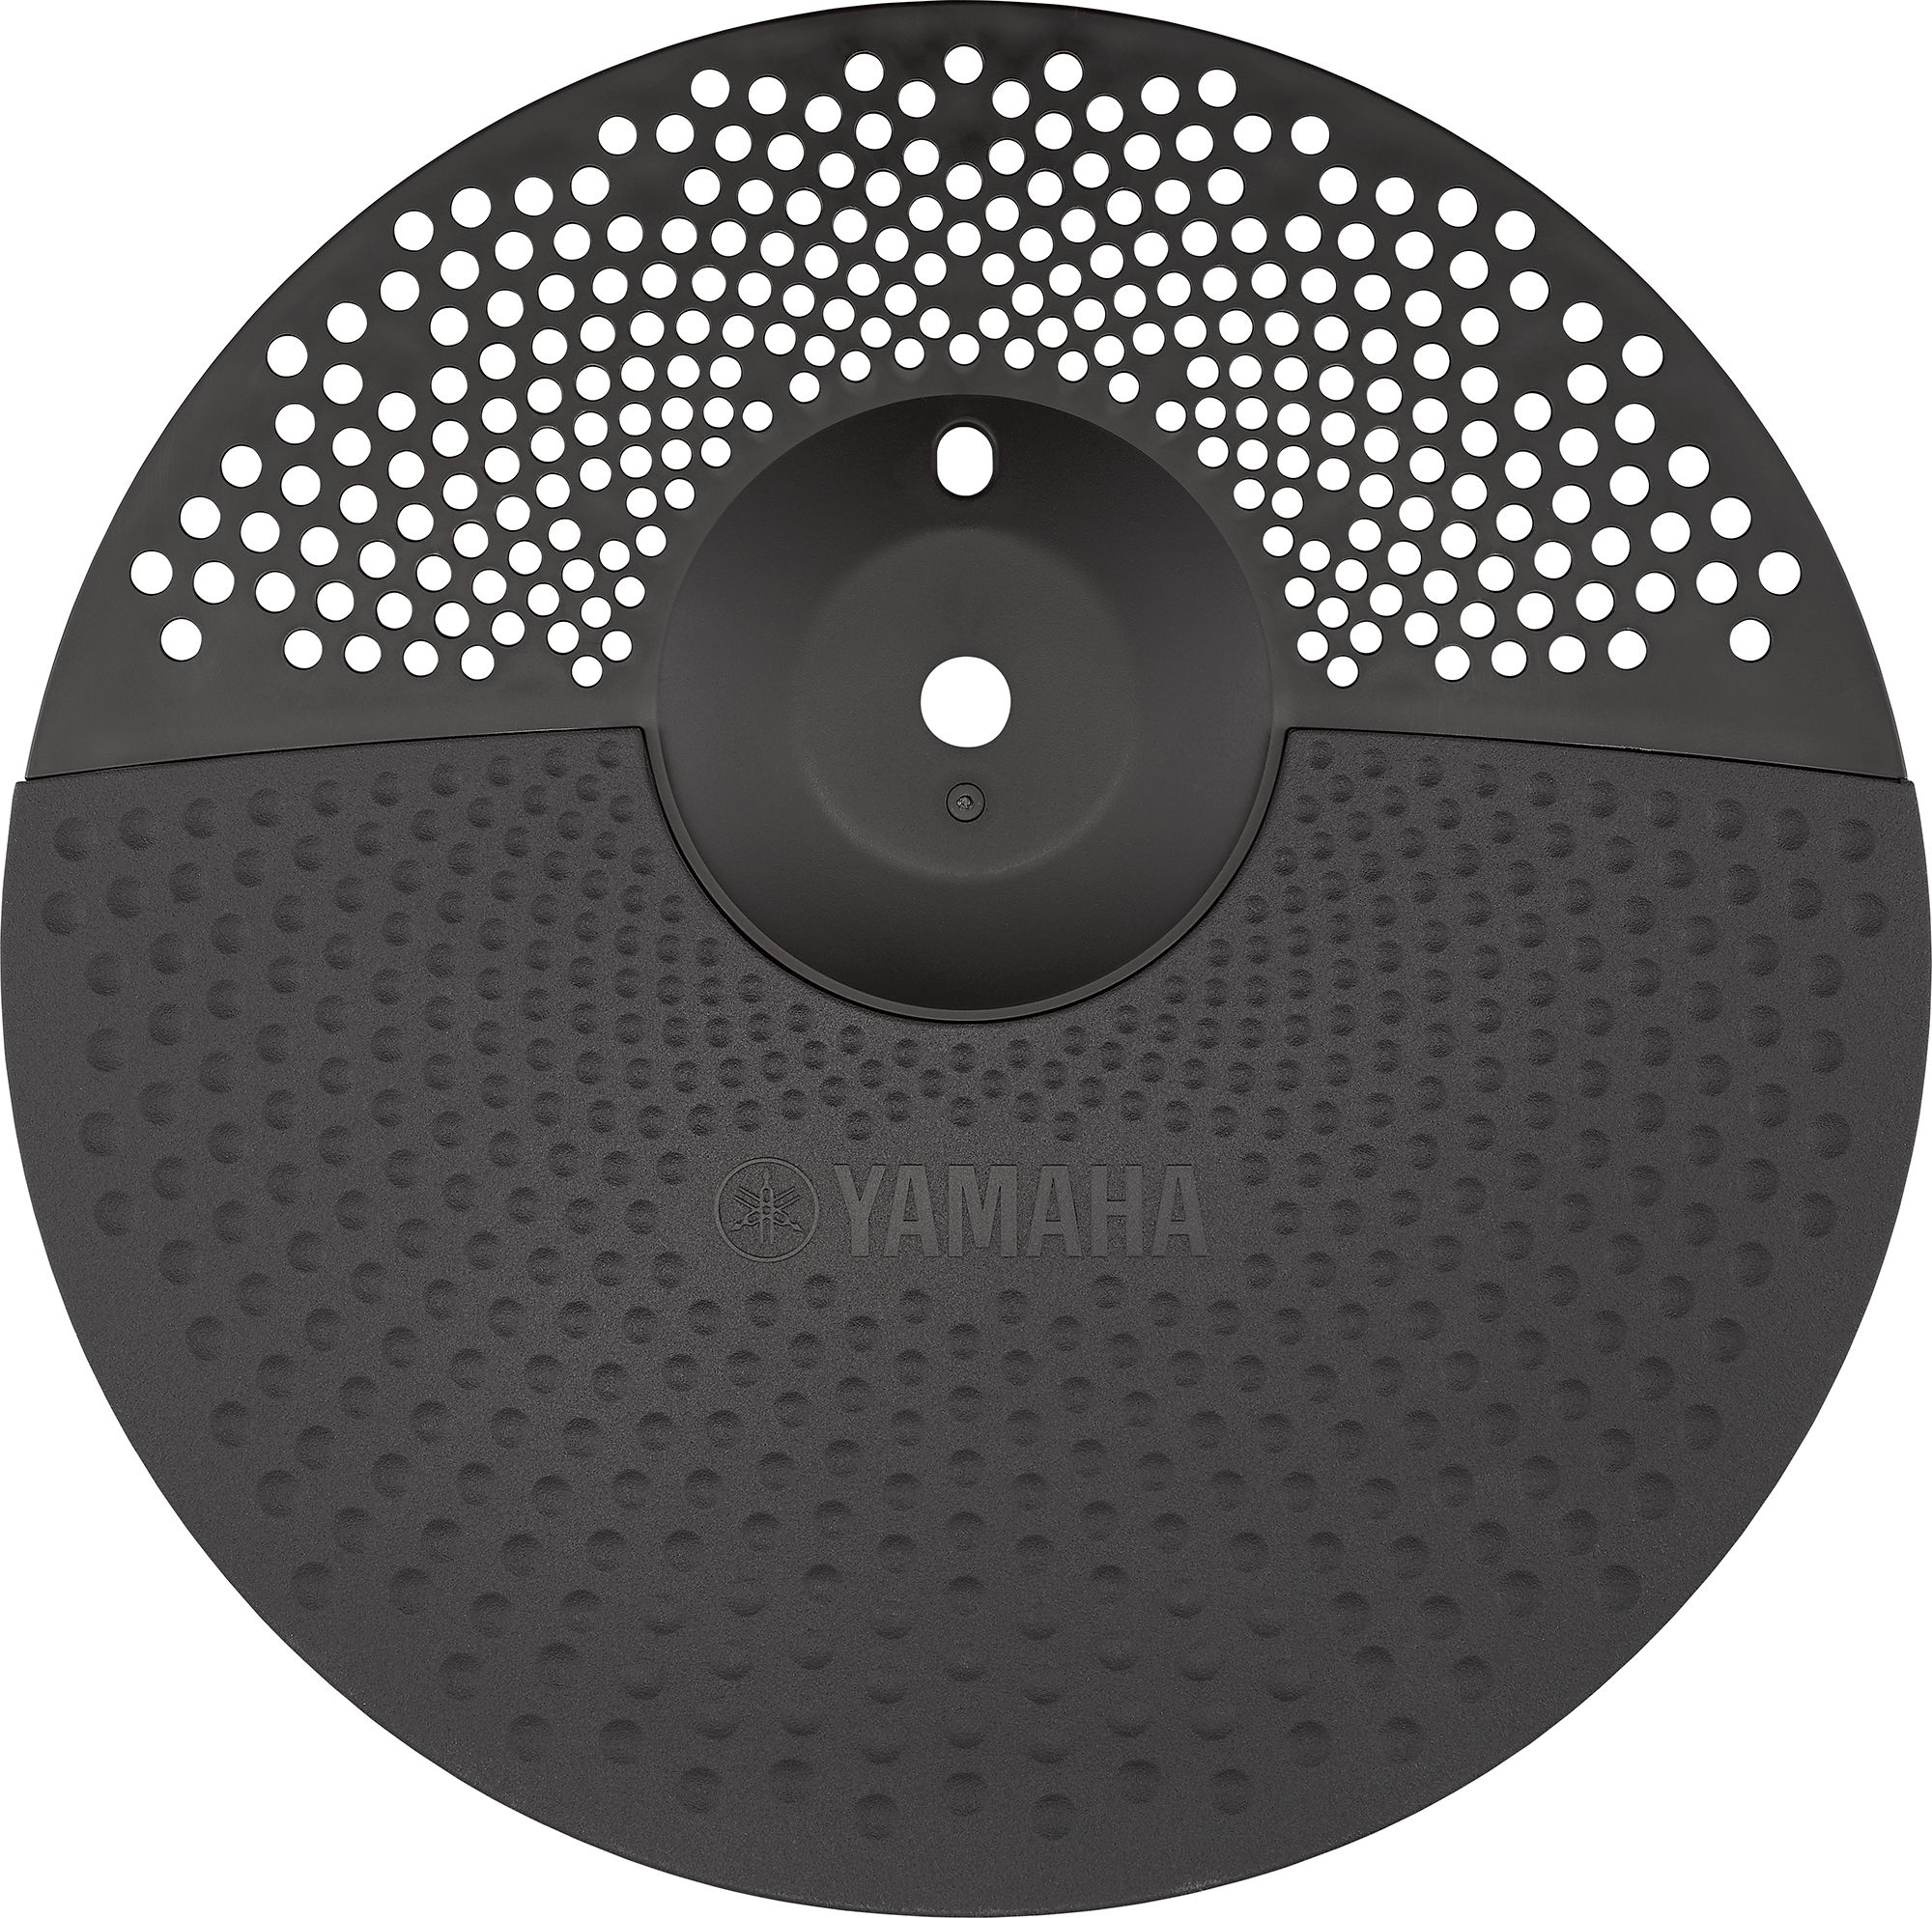 Yamaha PCY95 Cymbal Pad